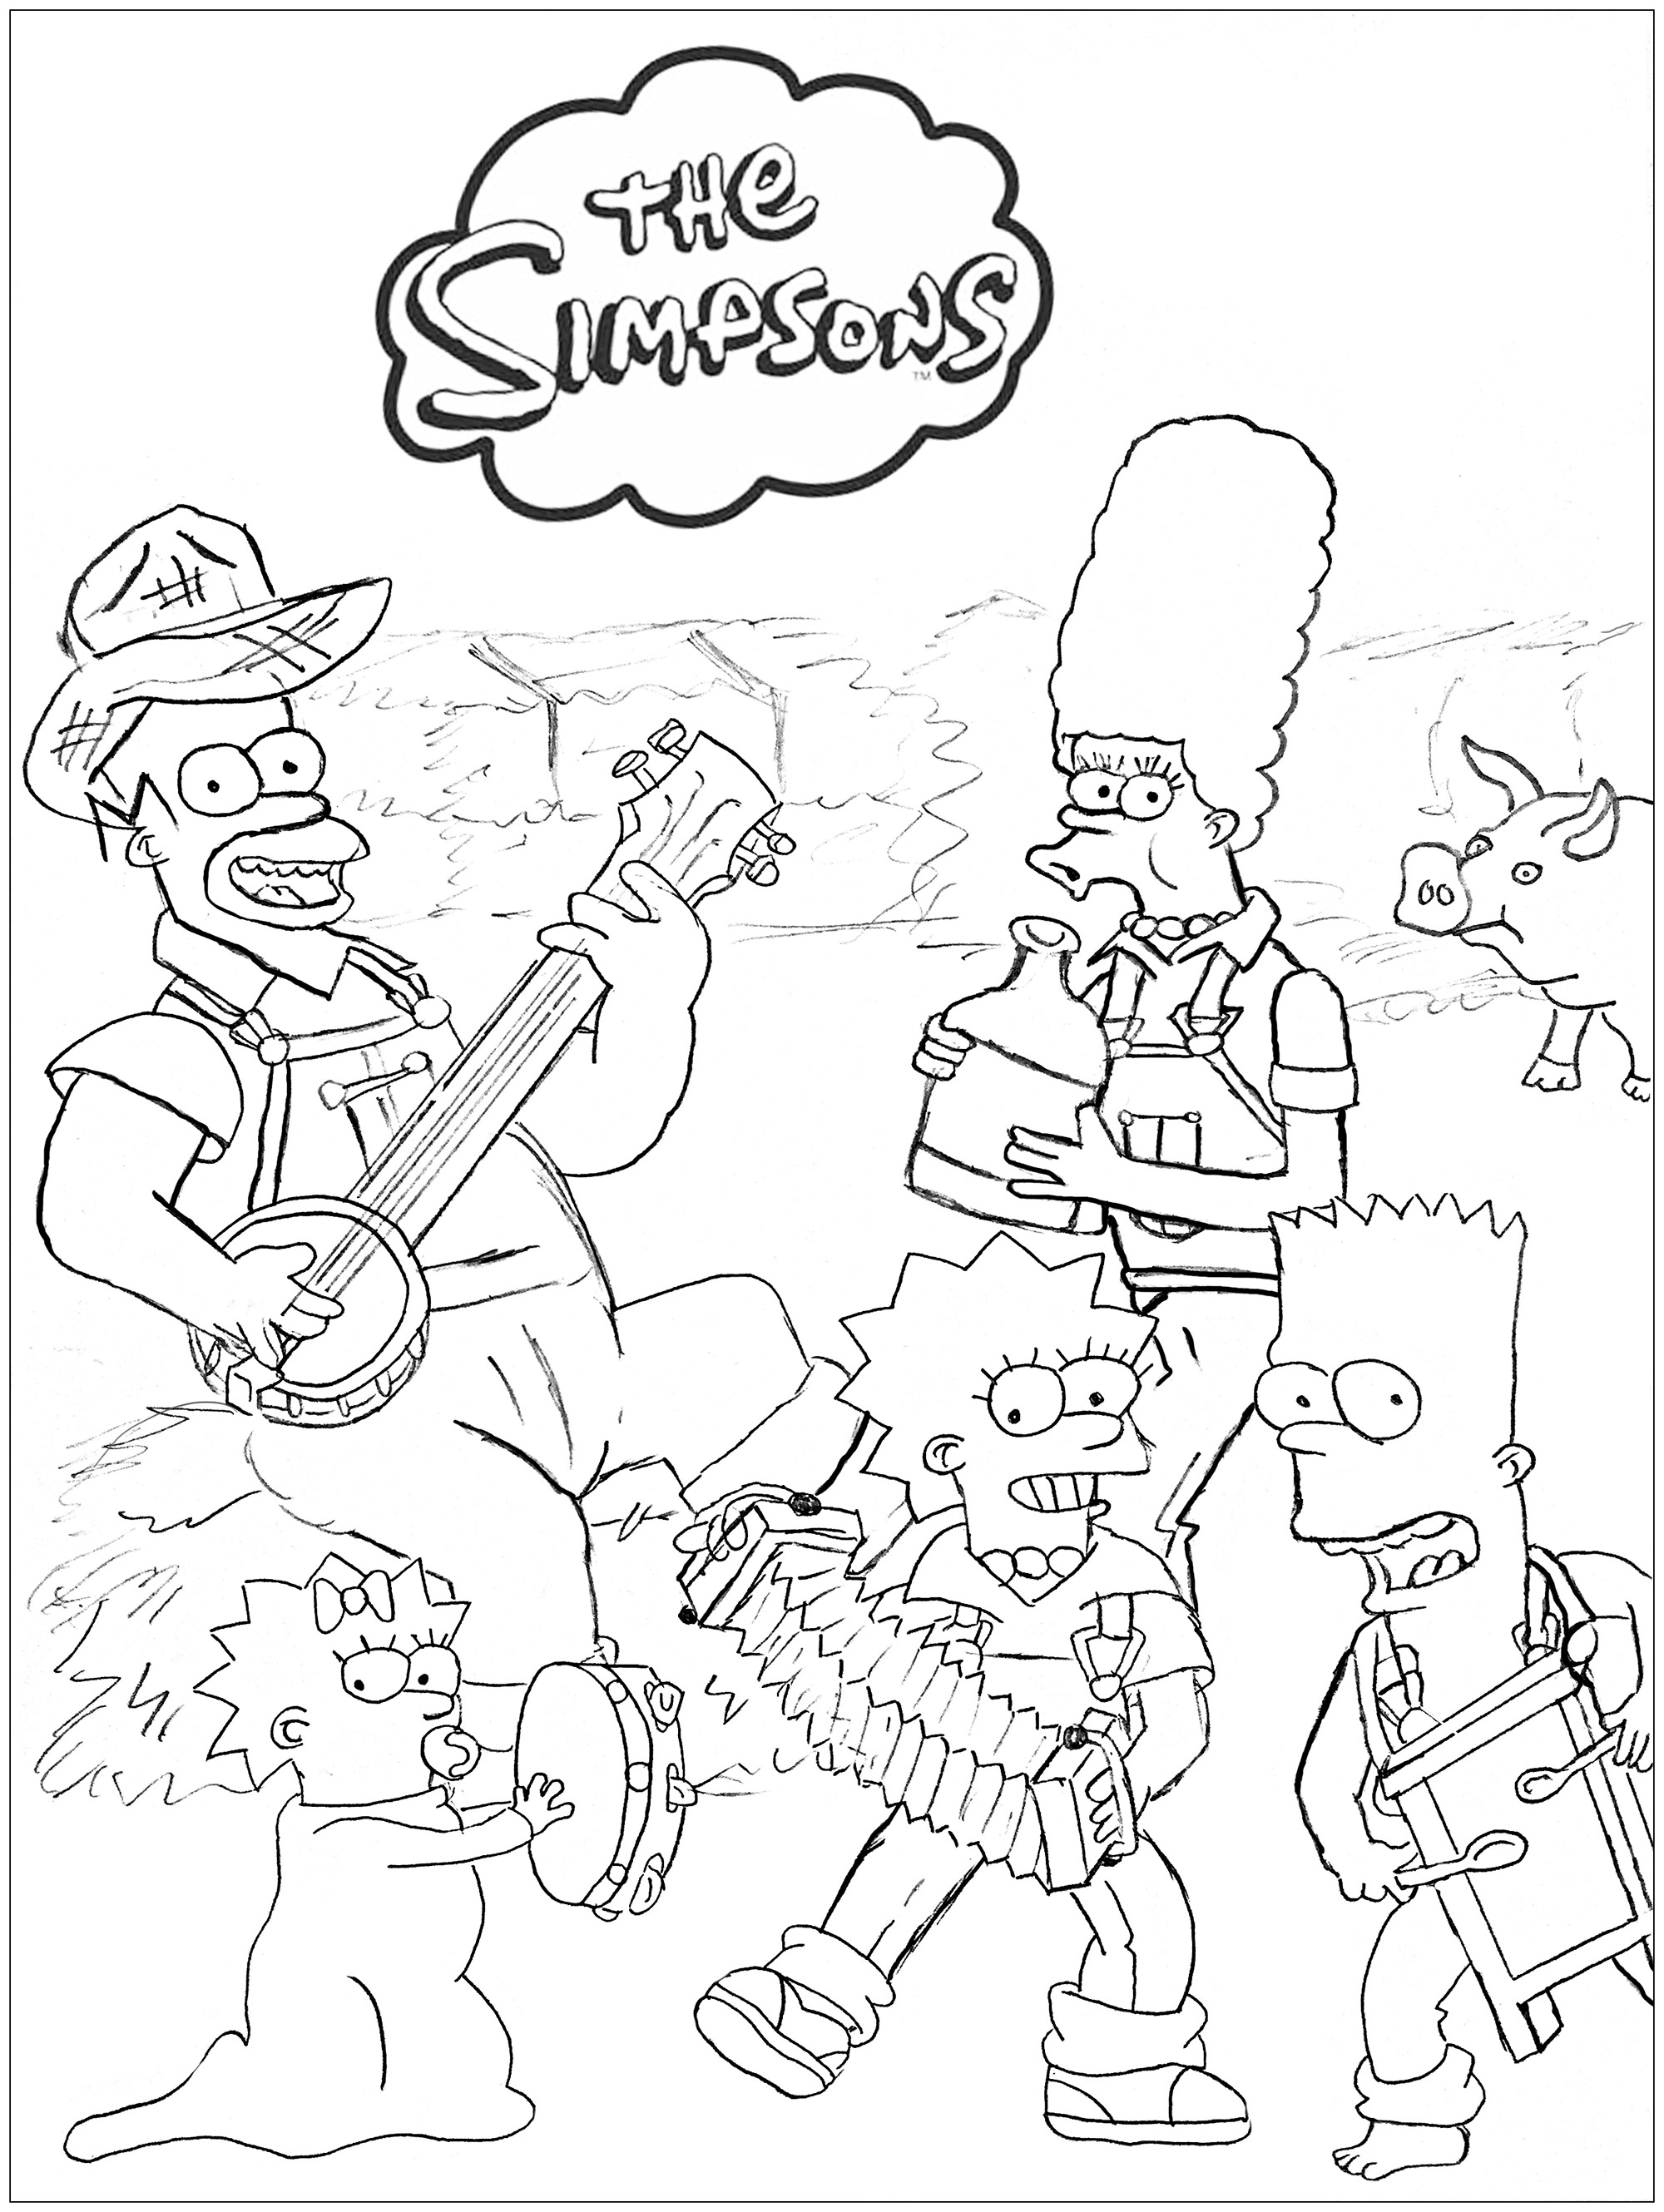 Los Simpson en la granja: un dibujo original creado por Romain